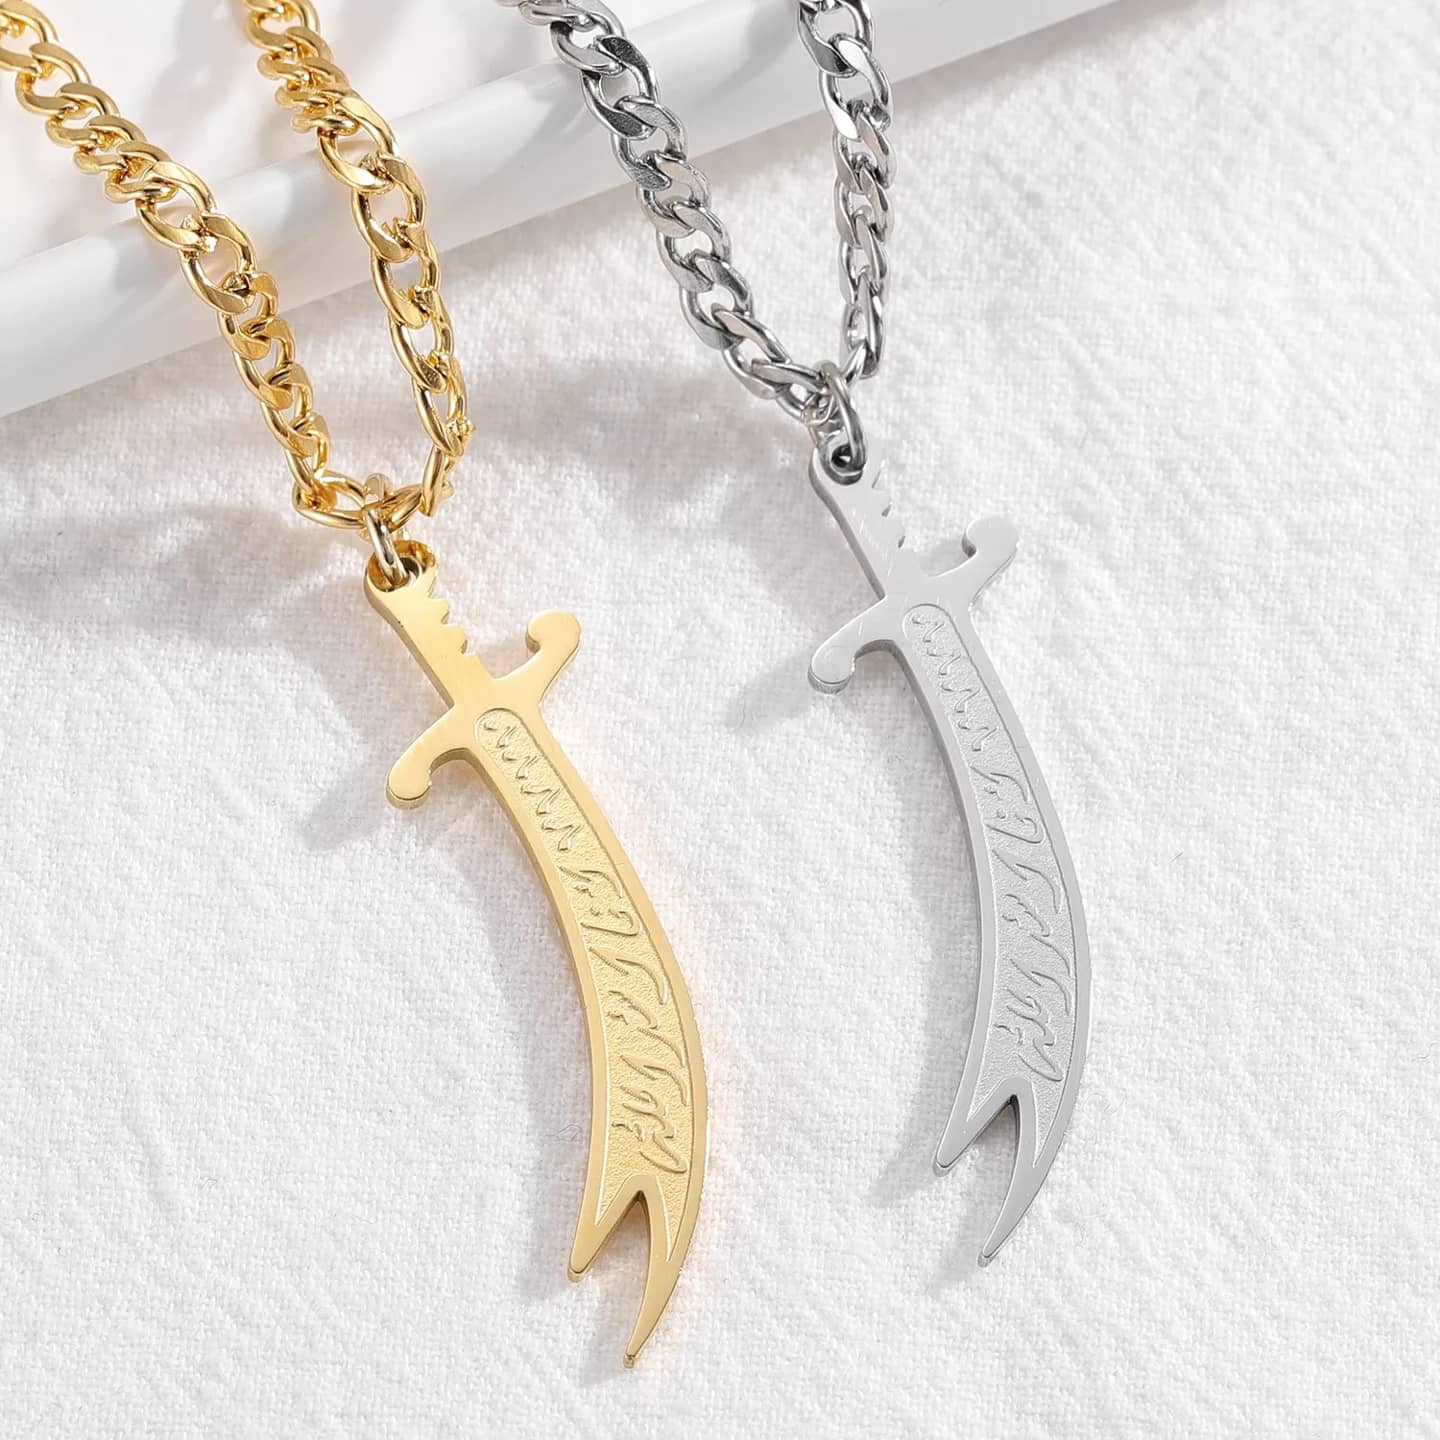 DEEN - Zulfiqar Sword - Arabic Pendant Necklace - Unisex - Silver / Black for Men and 18K gold / Rose Gold for women - Islamic Motivational Inspirational Gift - Made to Order